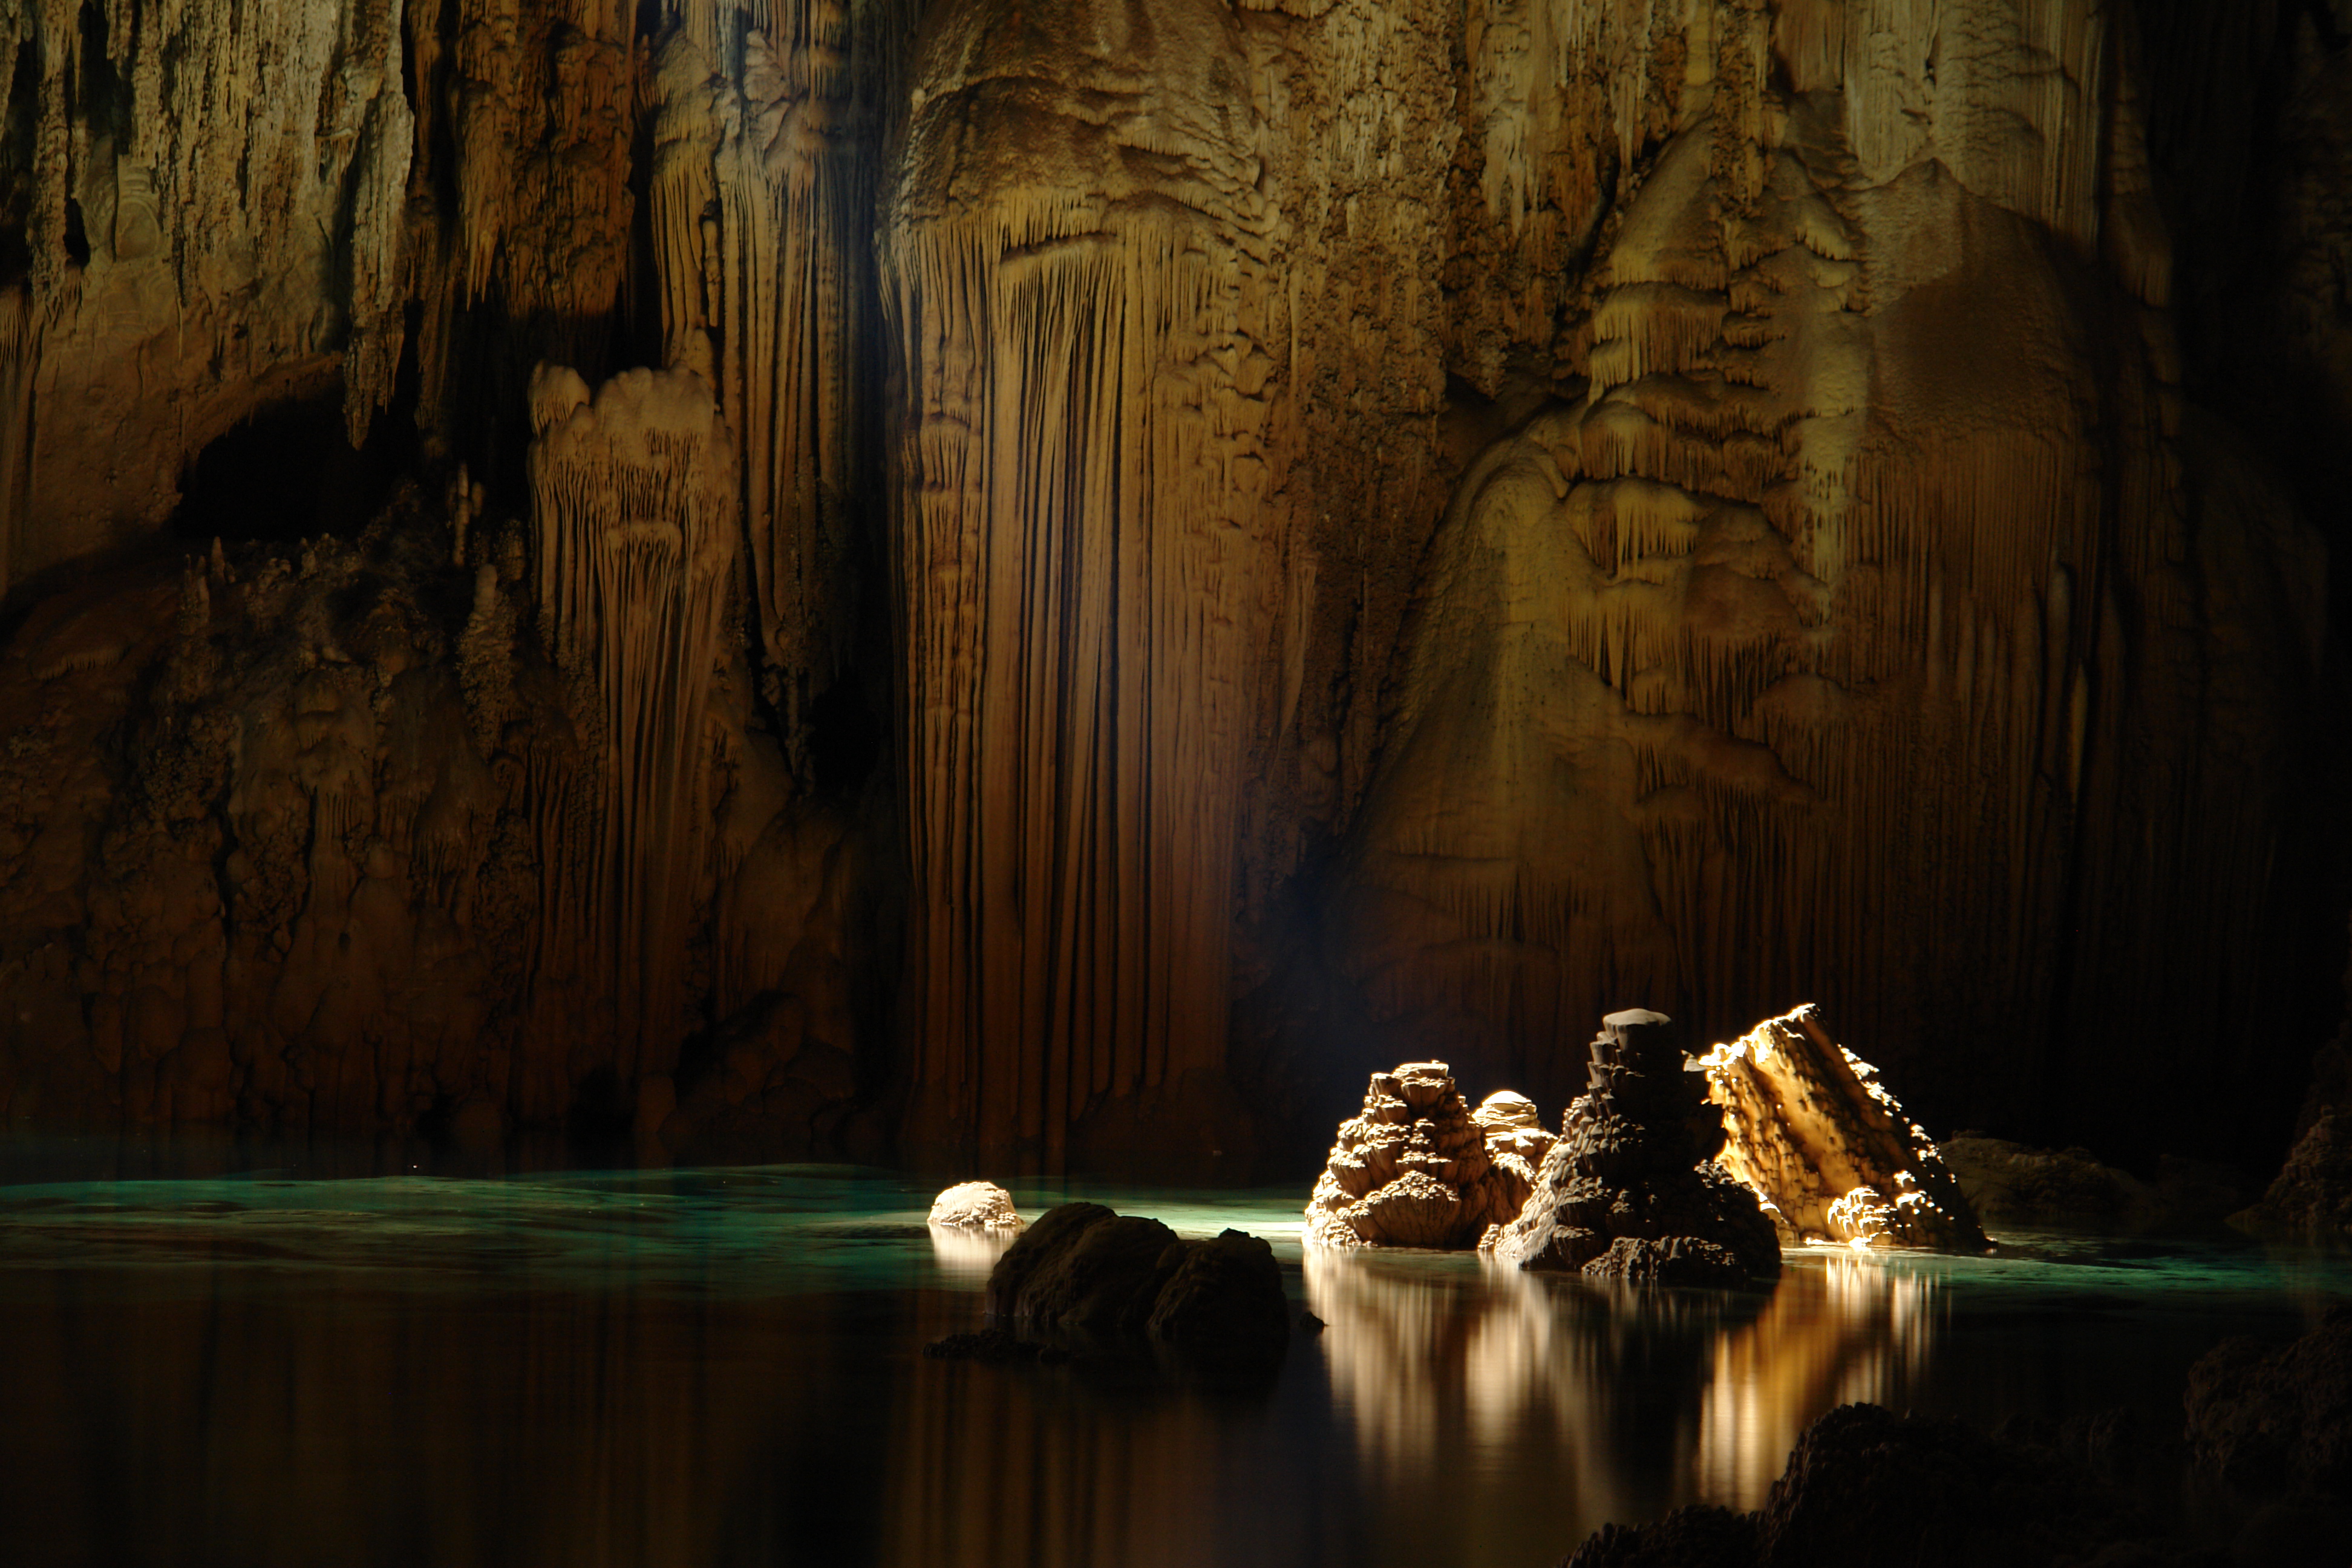 Limestone stalagmites inside the Anhumas abyss in Bonito, Mato Grosso do Sul, Brazil, by Caio Vilela (Caioribeirovilela).